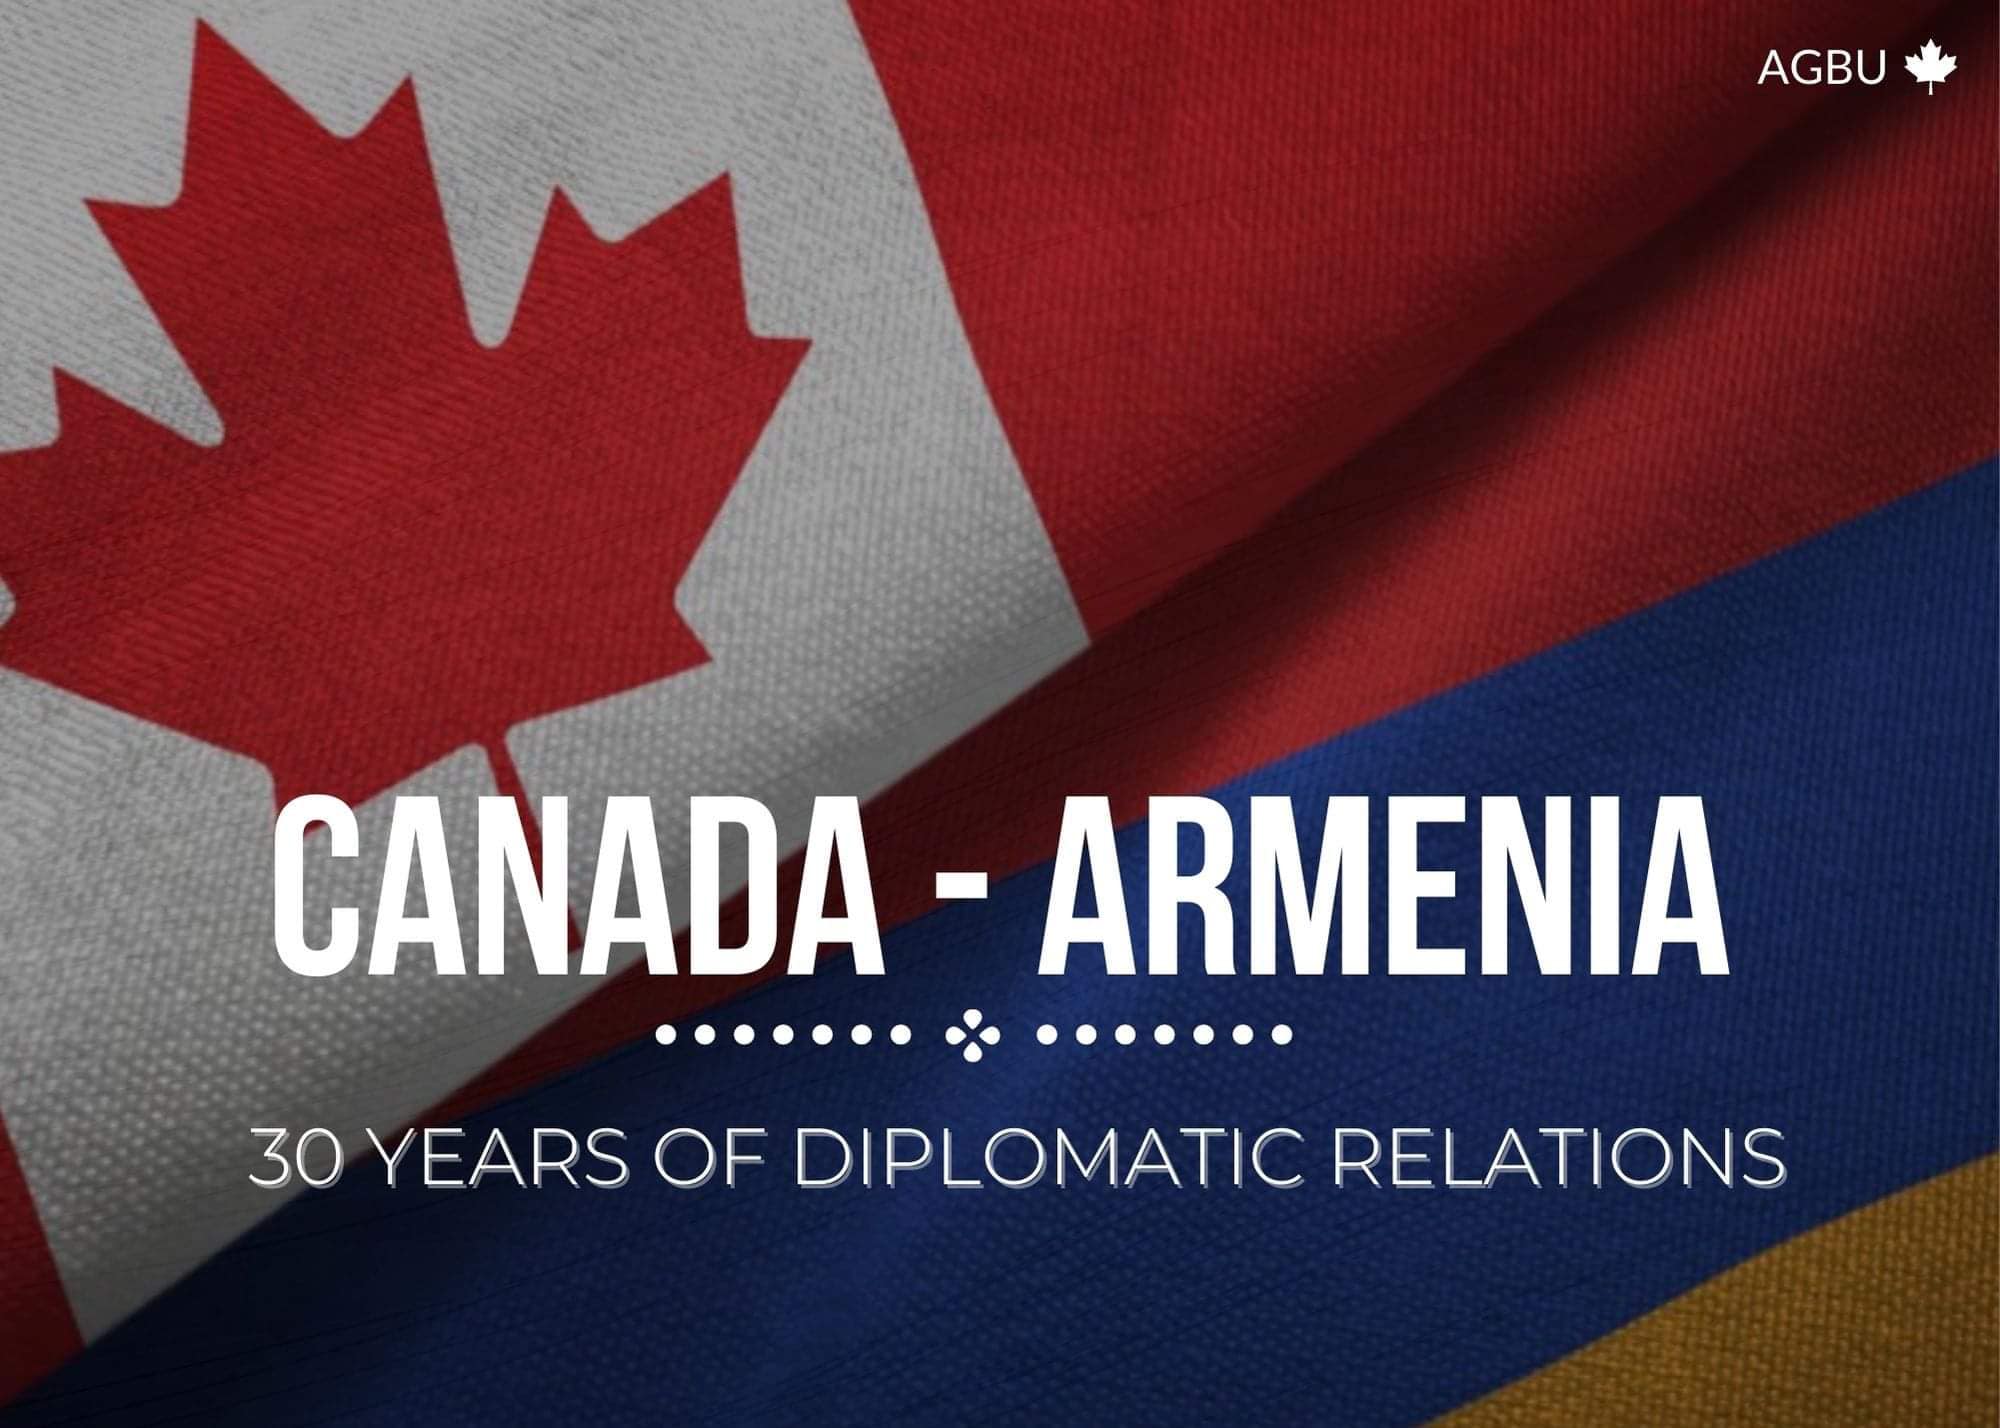 Canada, Armenia Mark 30th Anniversary of Diplomatic Relations